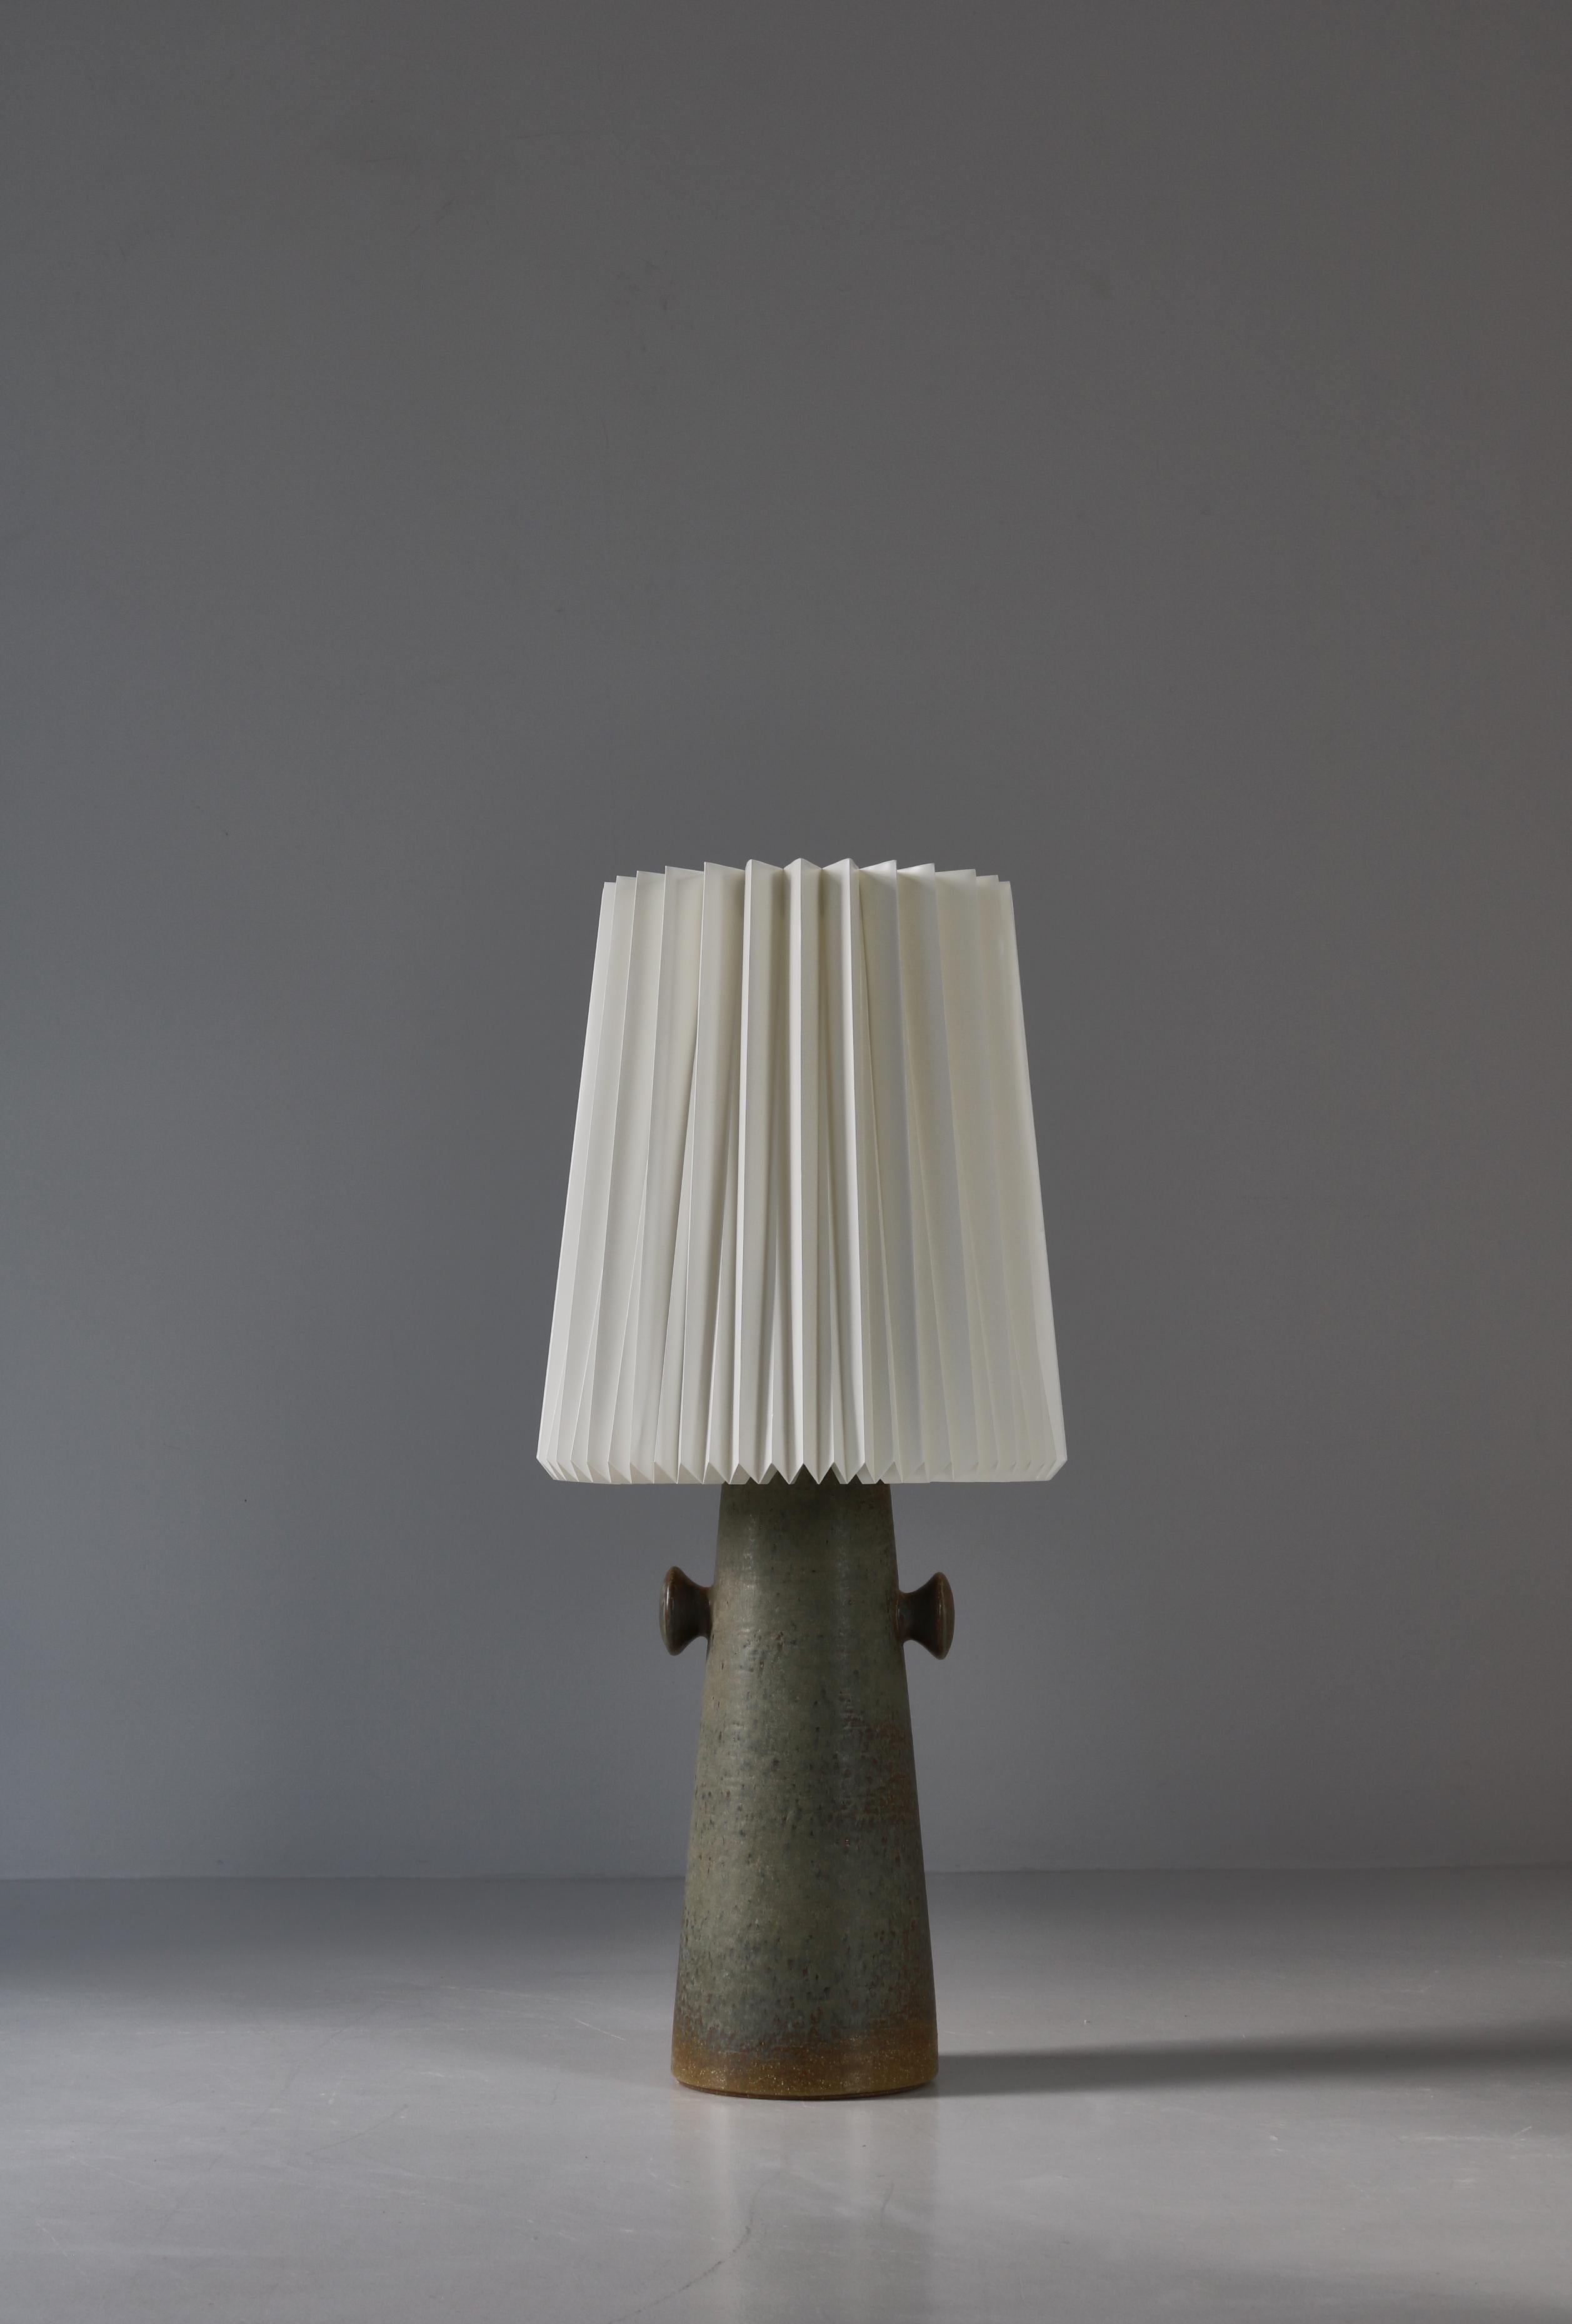 Danish Scandinavian Modern Stoneware Table Lamp by Palshus & Le Klint, Denmark, 1950s For Sale